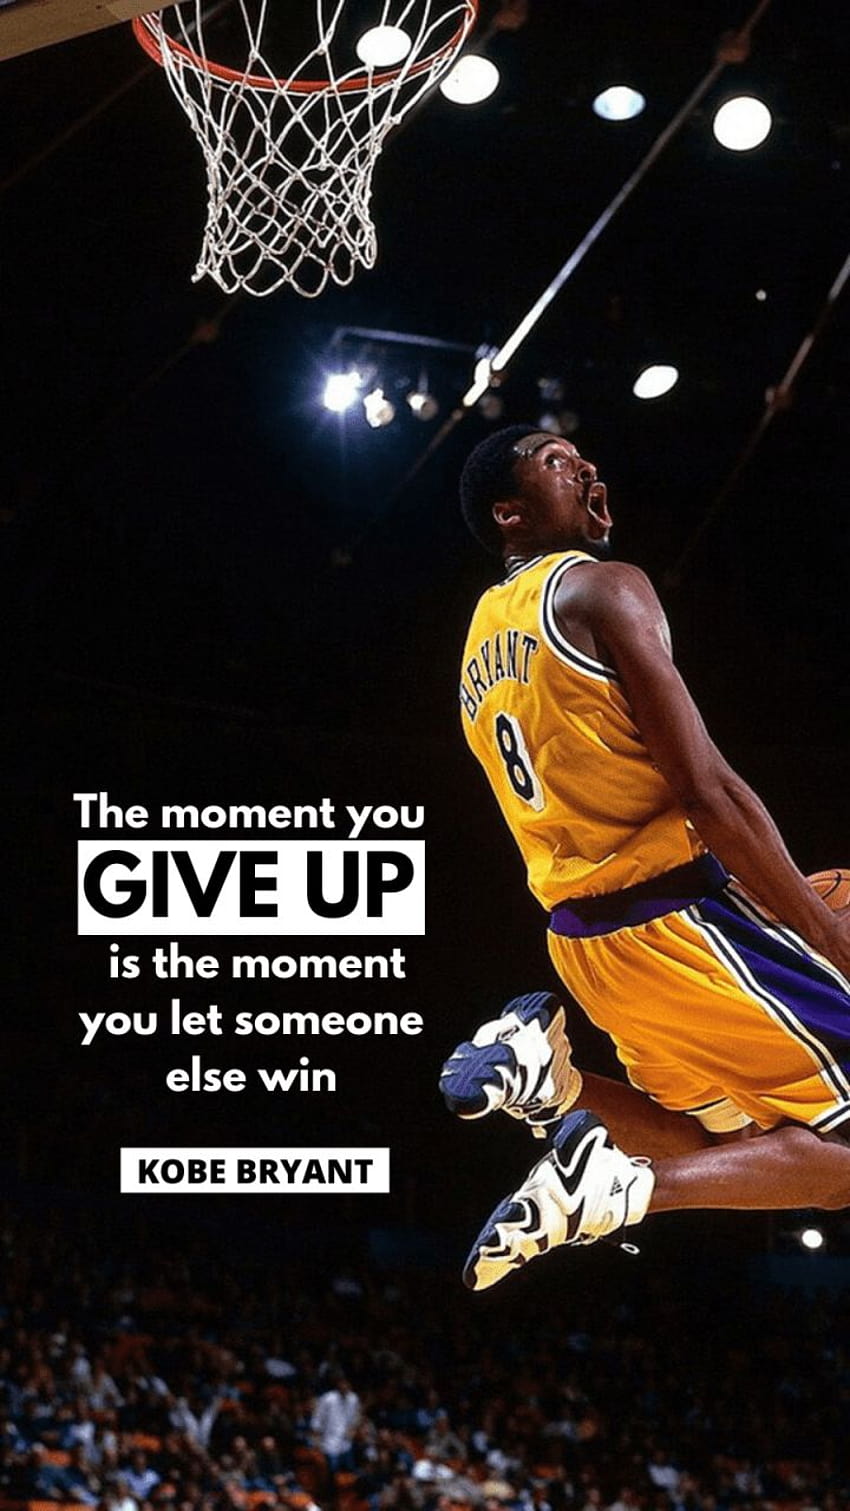 Kobe Bryant de citas famosas de Kobe, iphone de baloncesto inspirador fondo de pantalla del teléfono